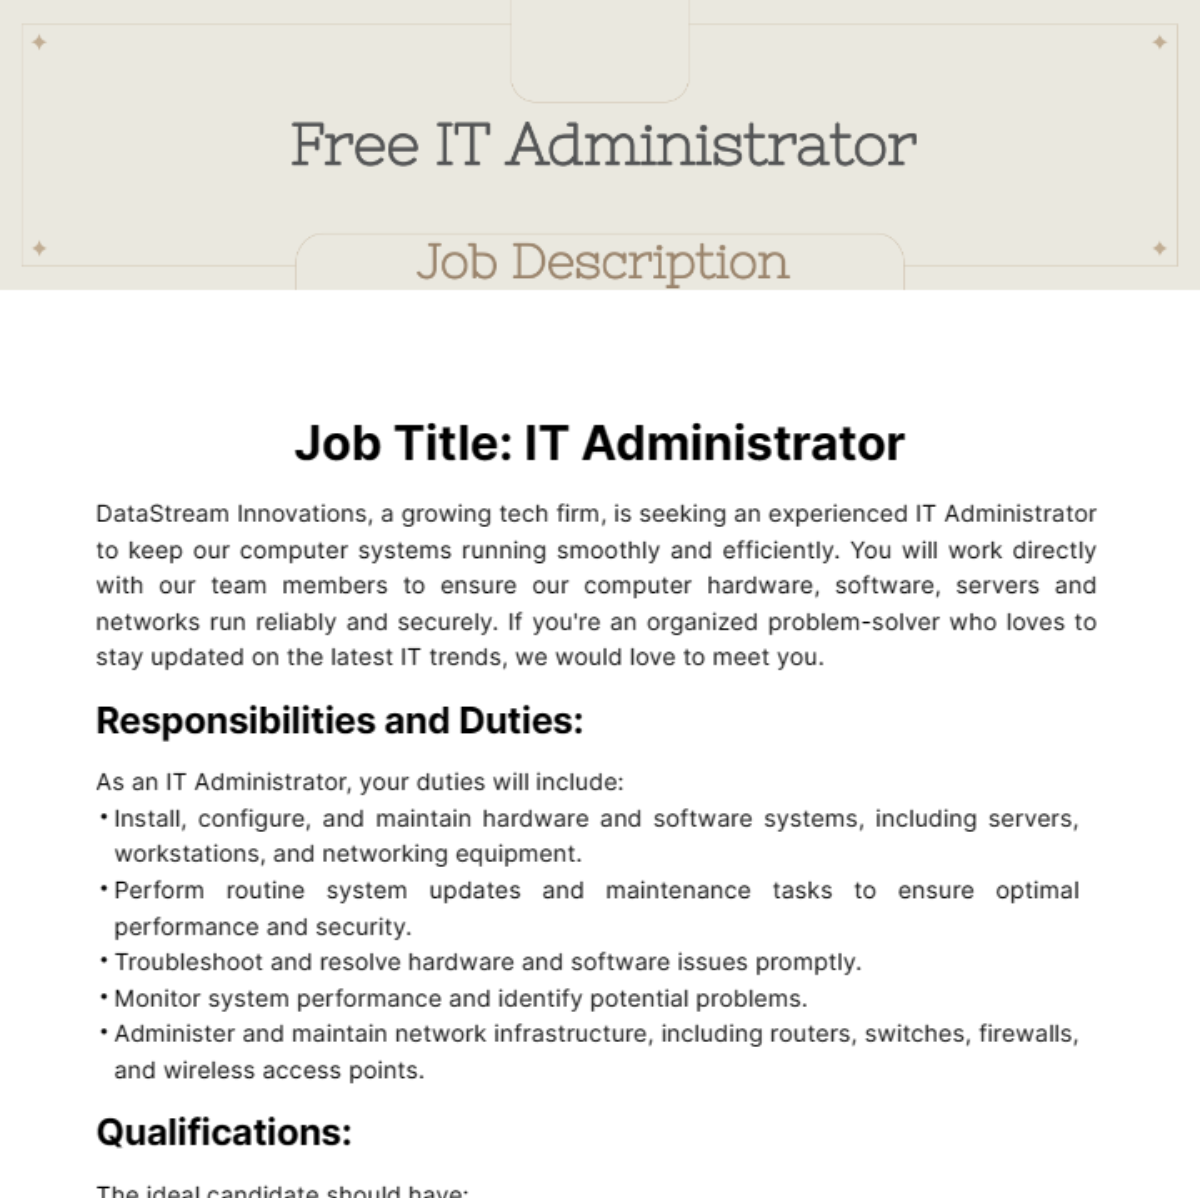 Free IT Administrator Job Description Template